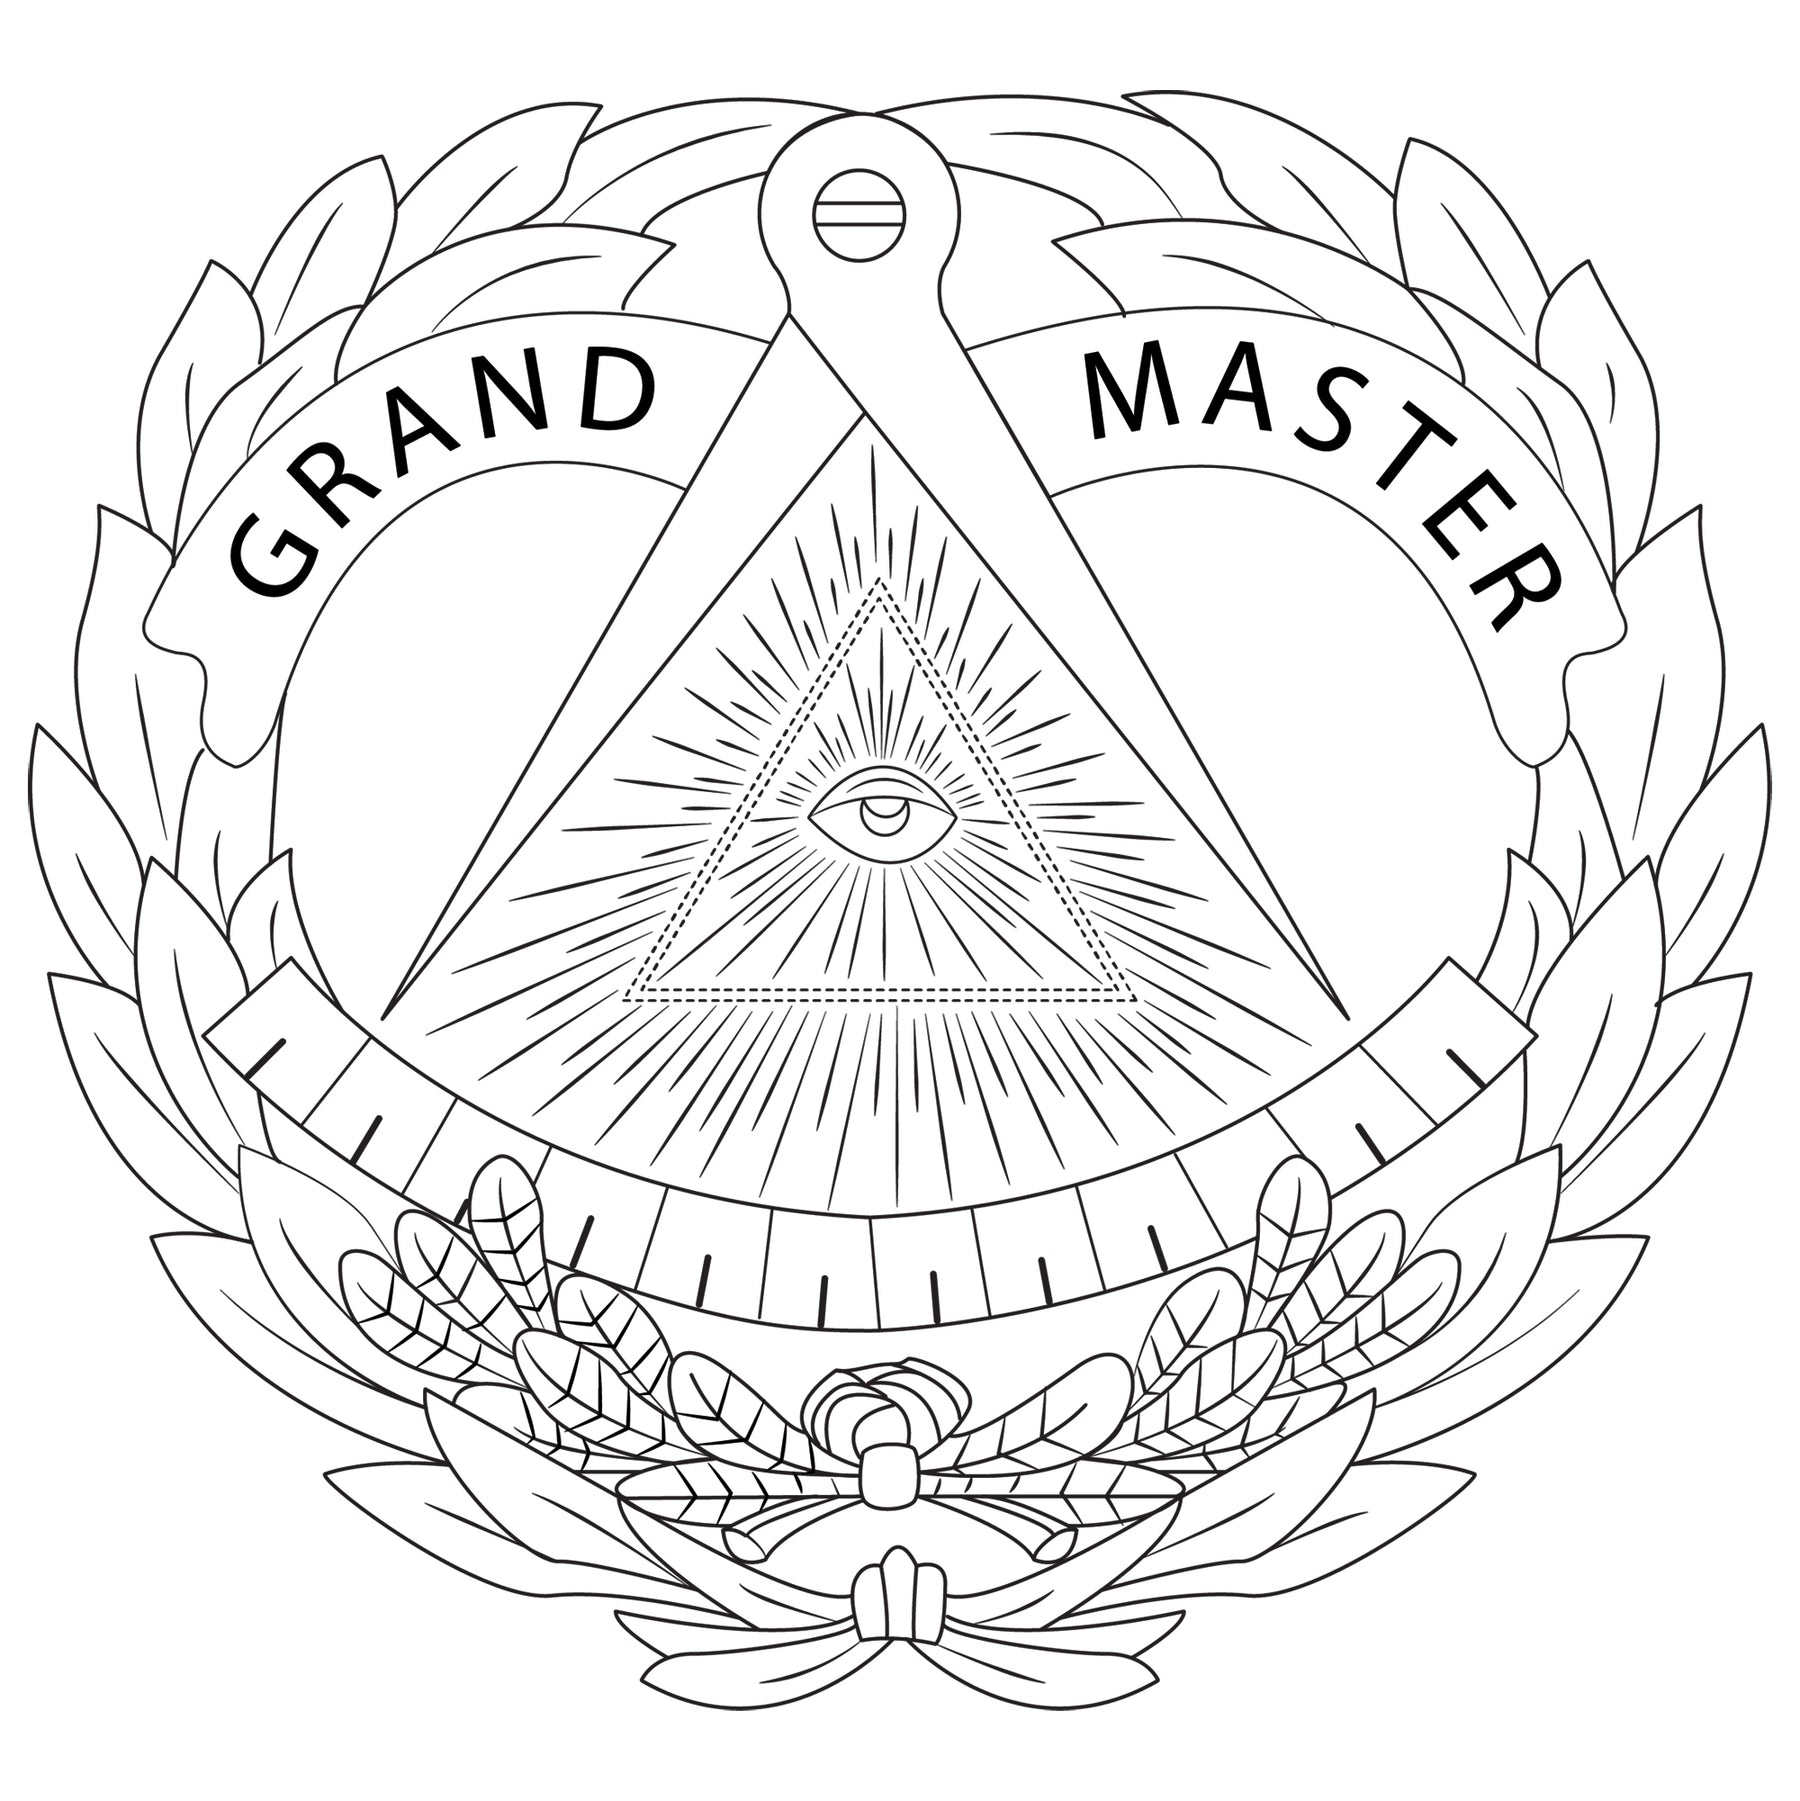 Grand Master Blue Lodge Umbrella - Three Folding Windproof - Bricks Masons